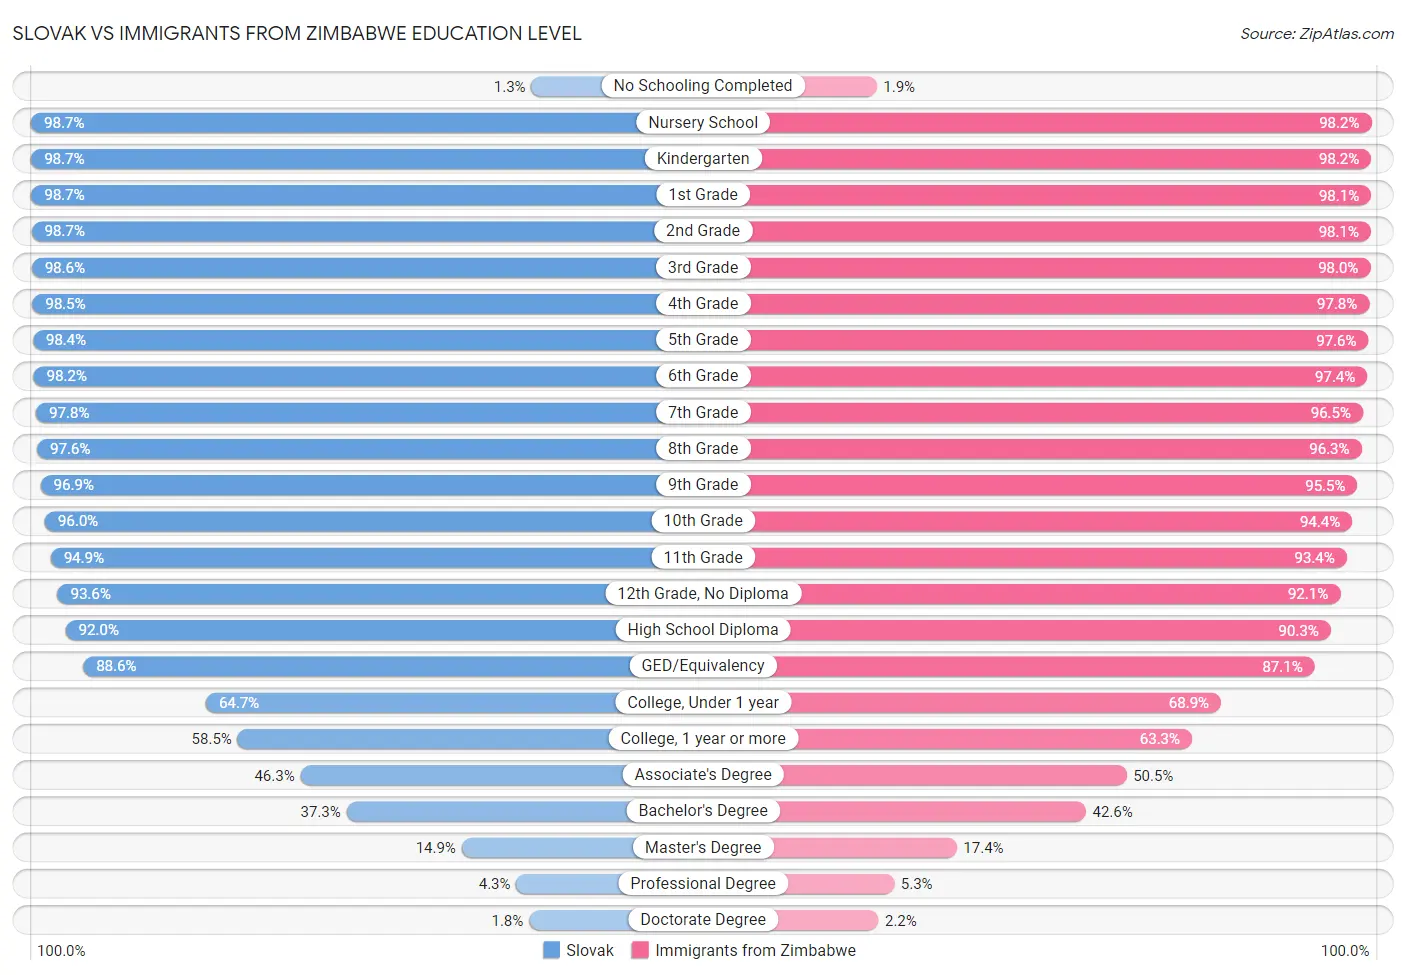 Slovak vs Immigrants from Zimbabwe Education Level